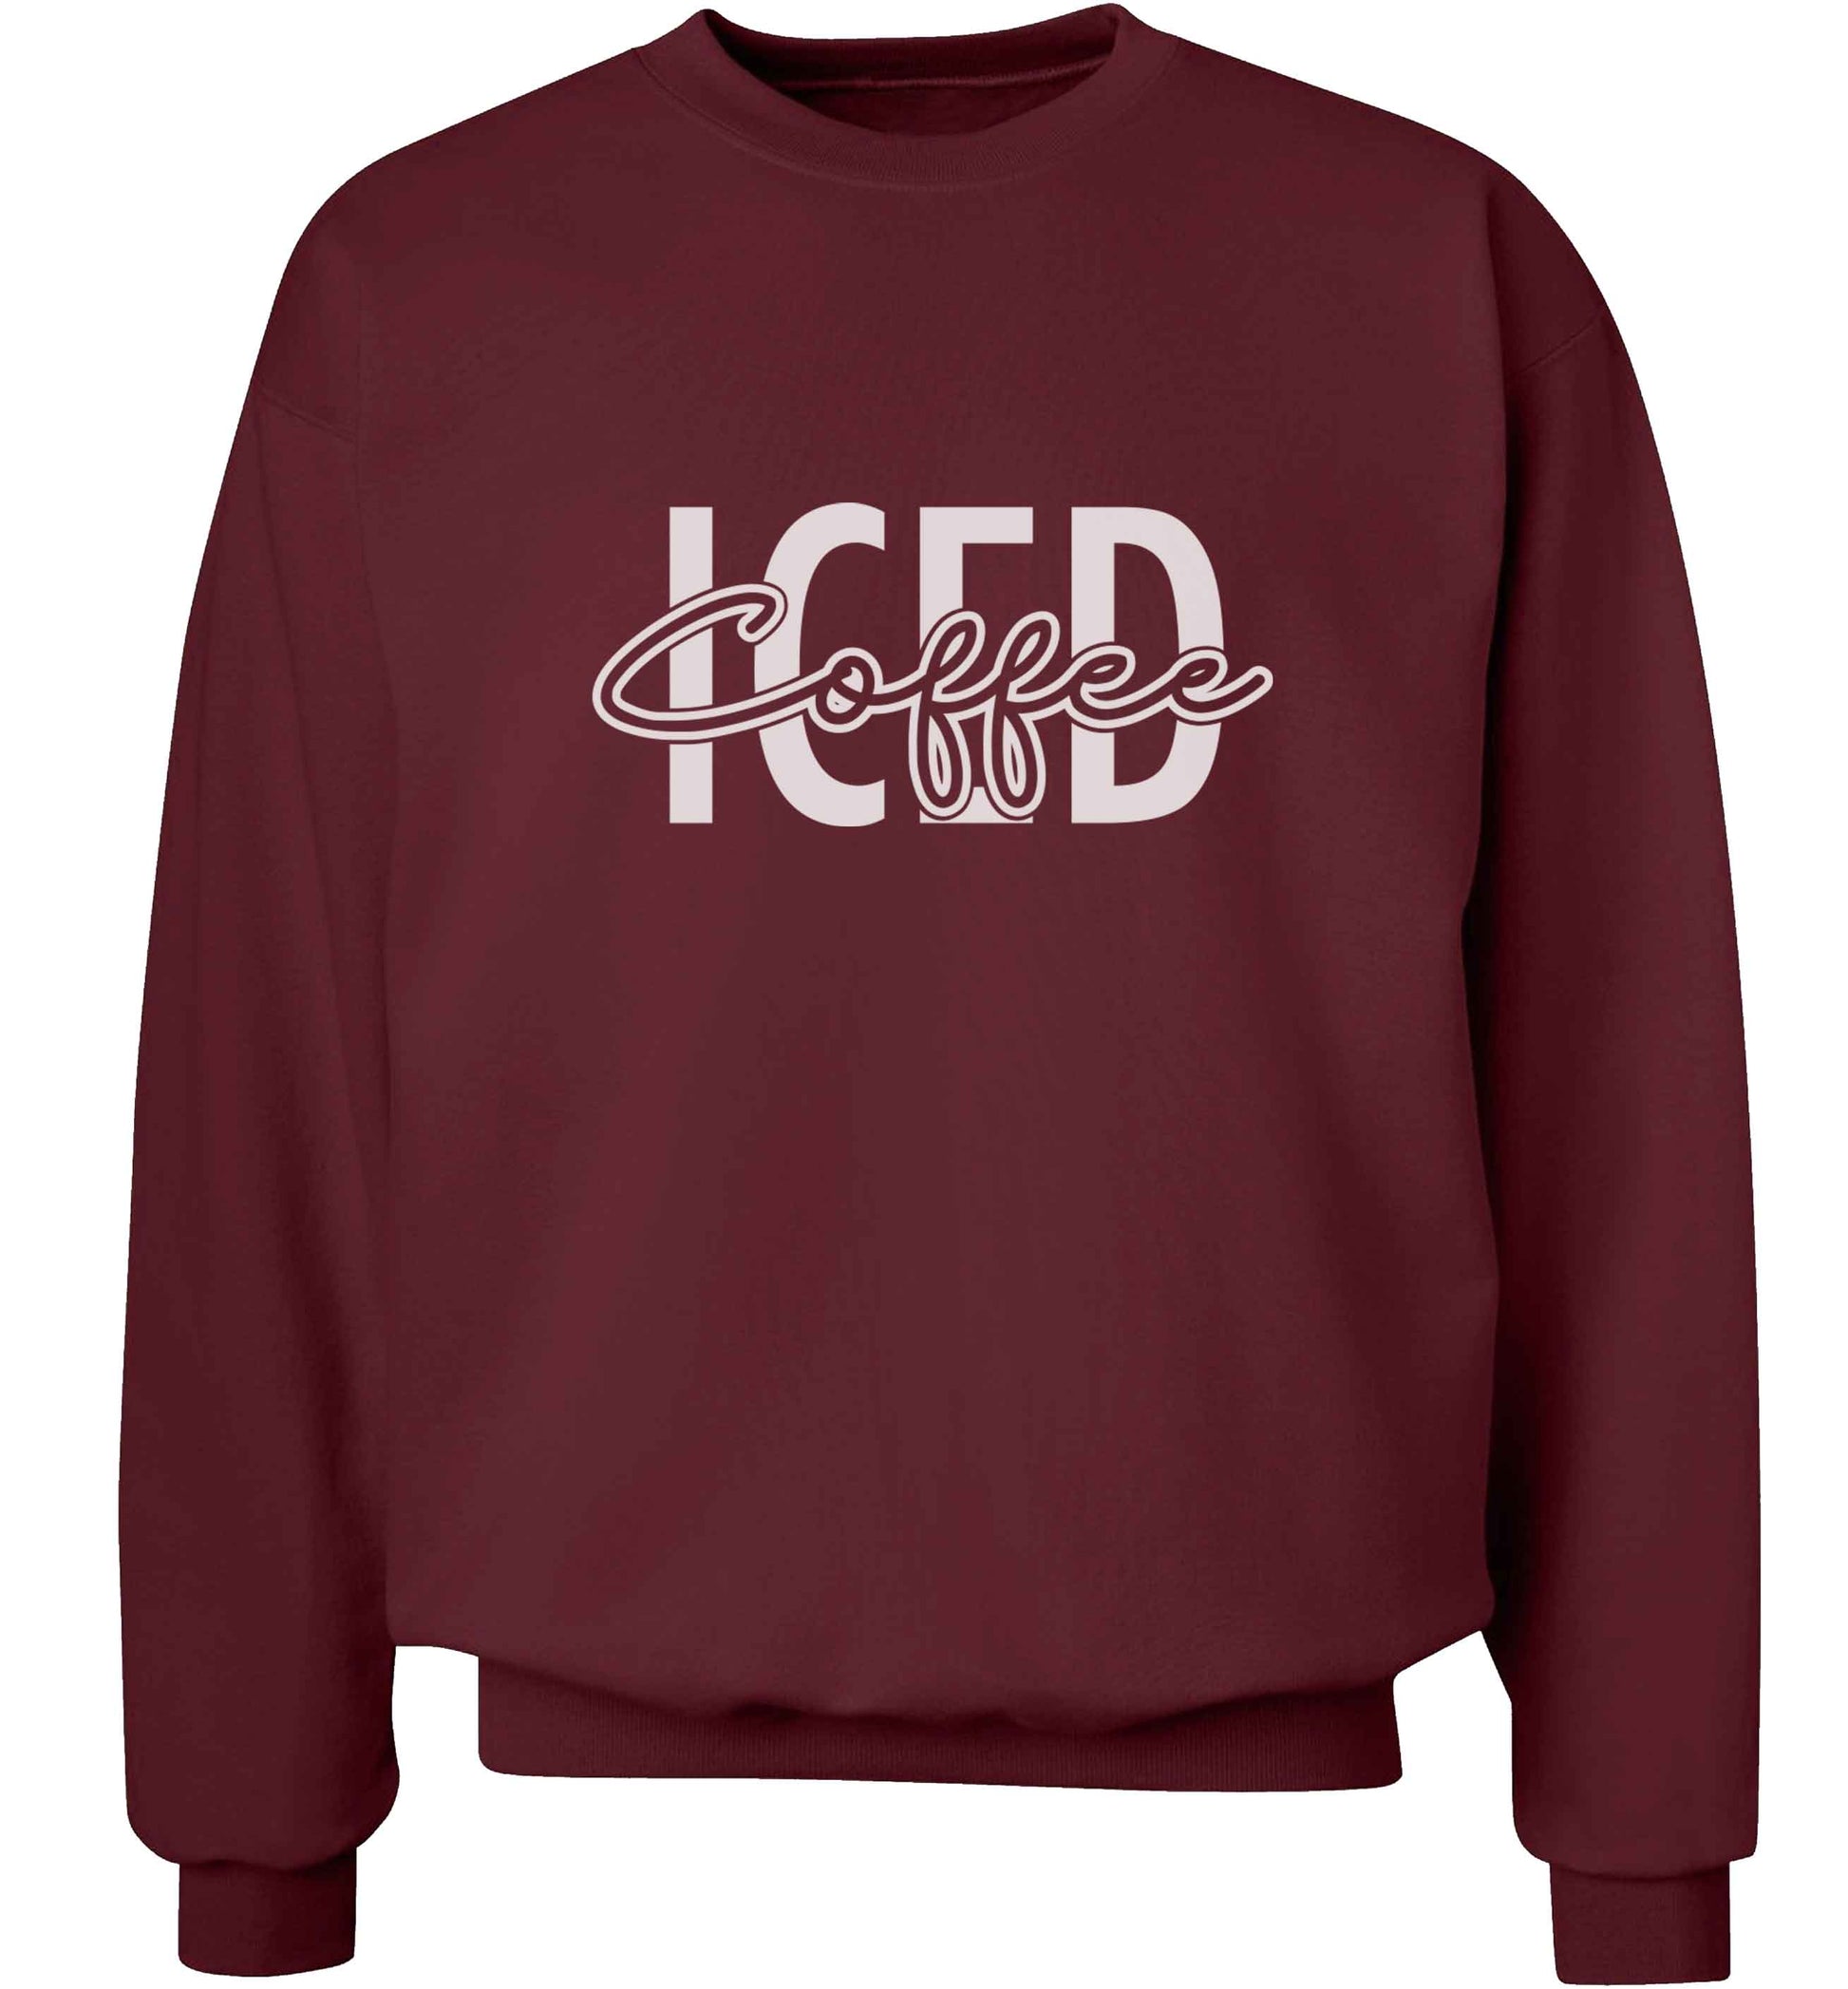 Iced Coffee adult's unisex maroon sweater 2XL